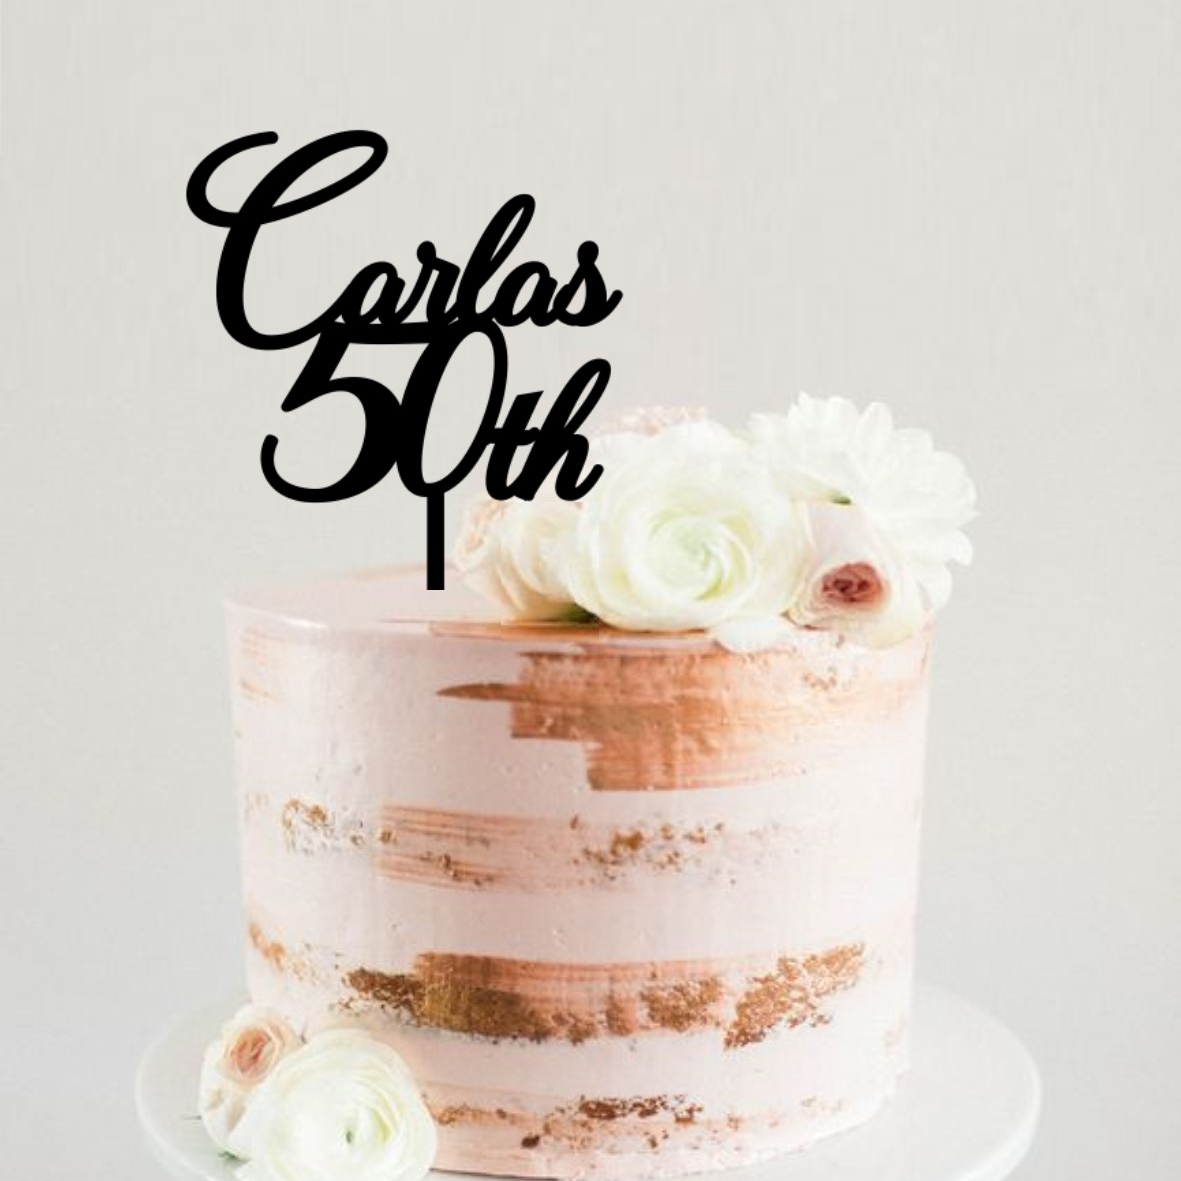 Quick Creations Cake Topper - Carla's 50th